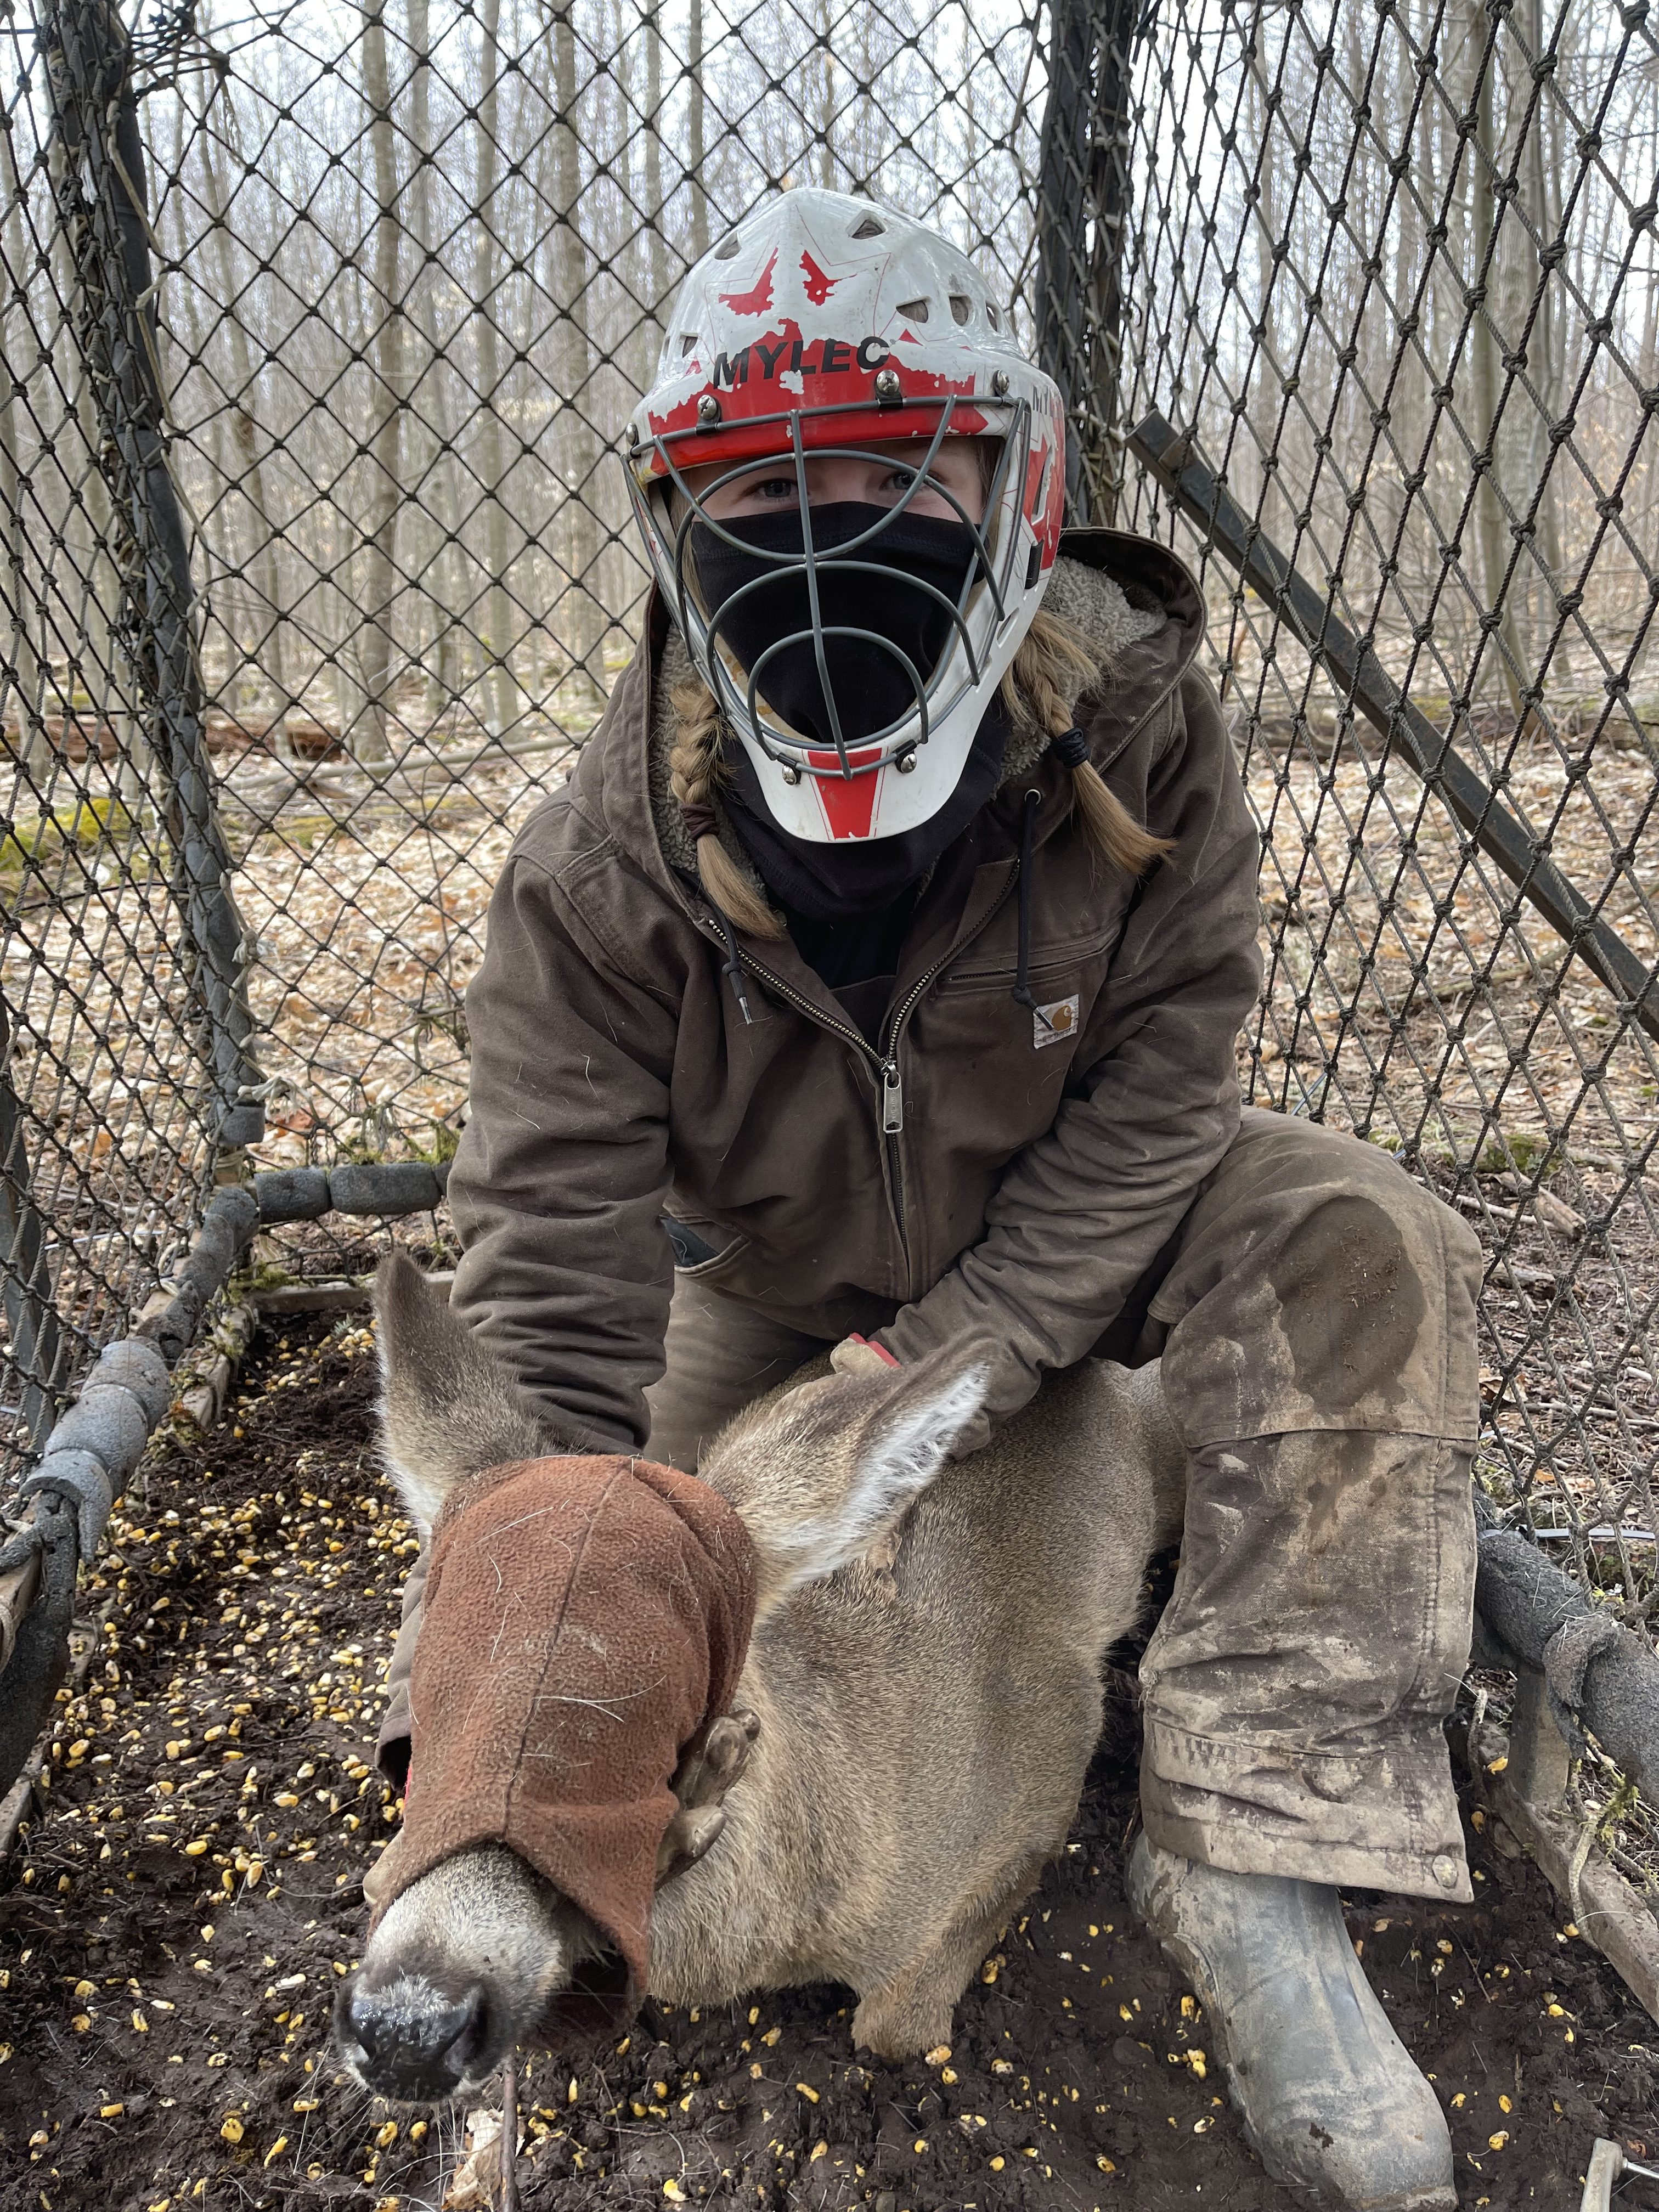 Crew member restraining deer in Clover trap